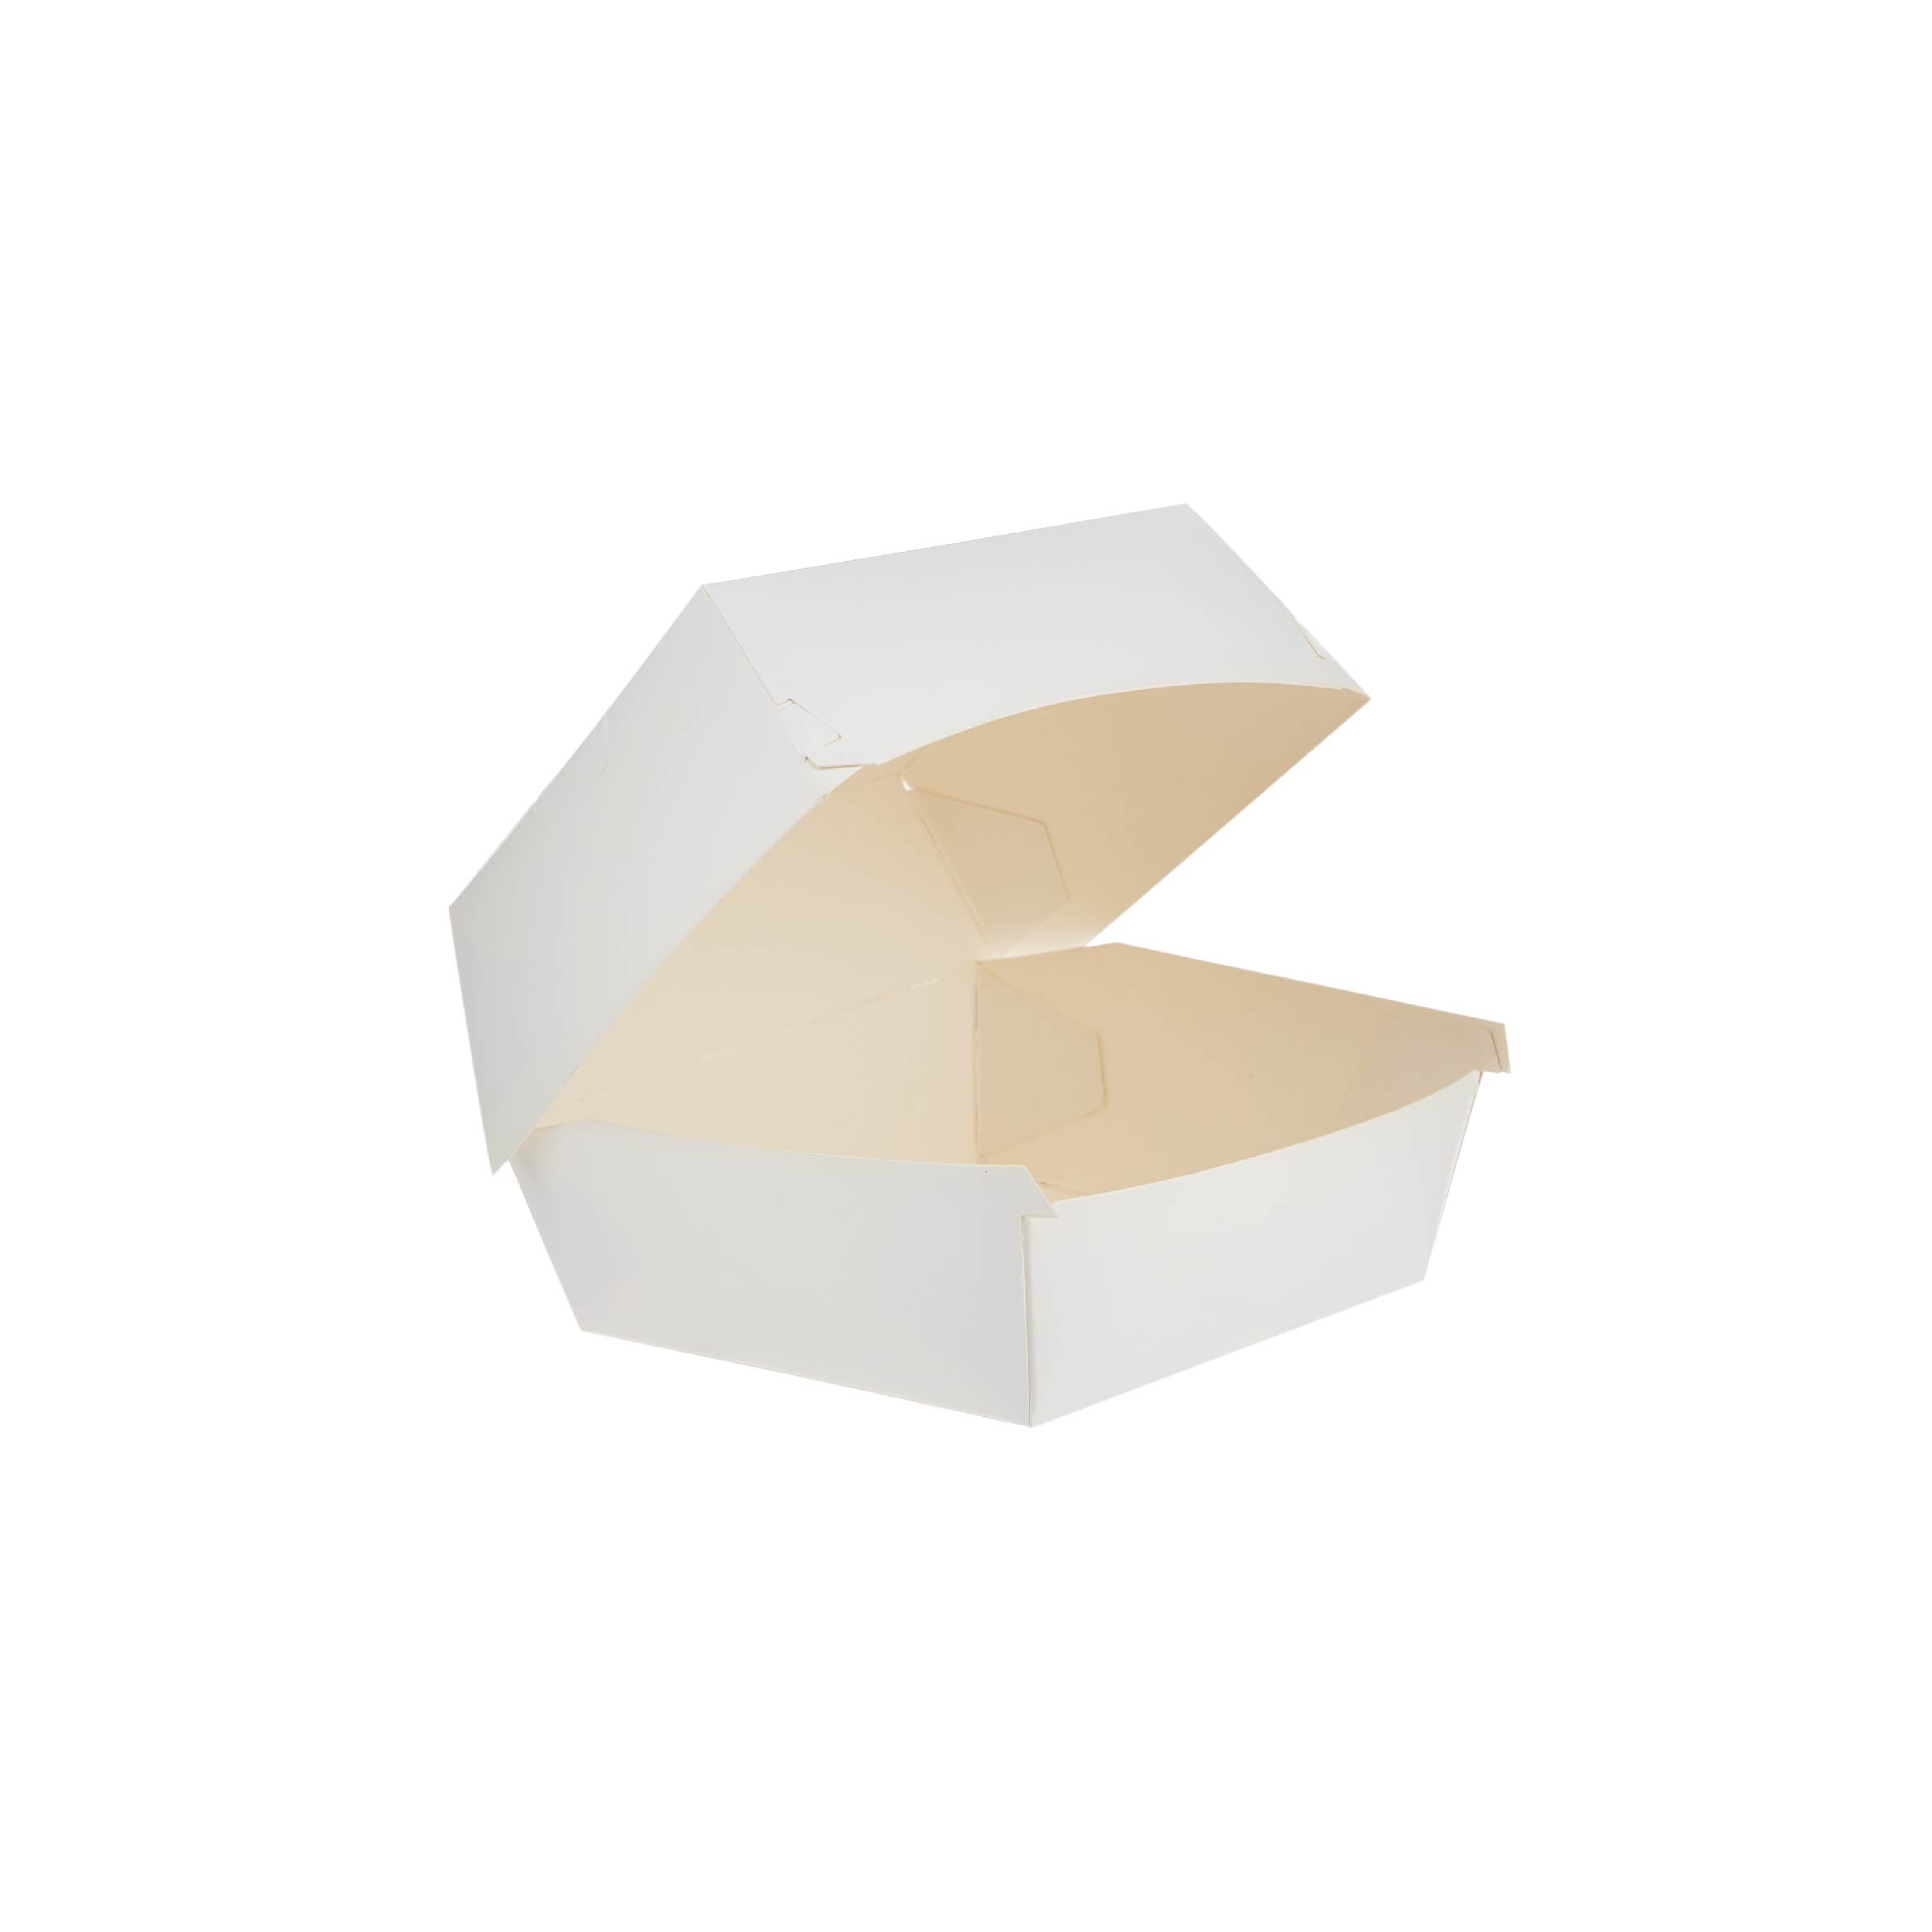 Paper Burger Box - Hotpack UAE